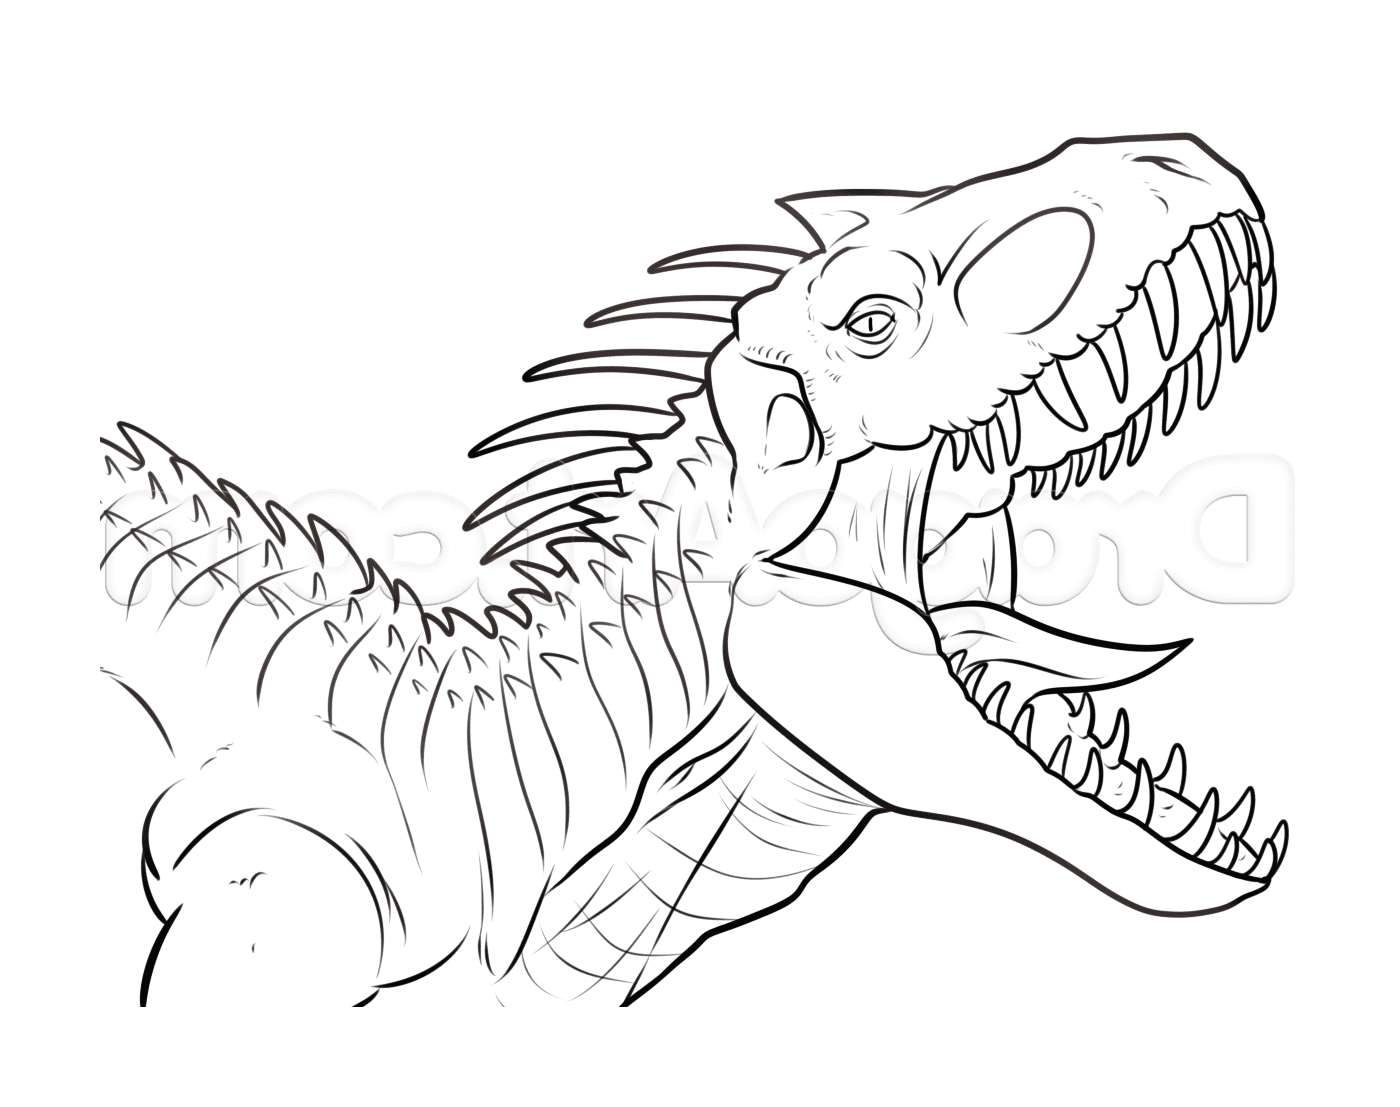  Indominus Rex spaventoso da Jurassic Park 